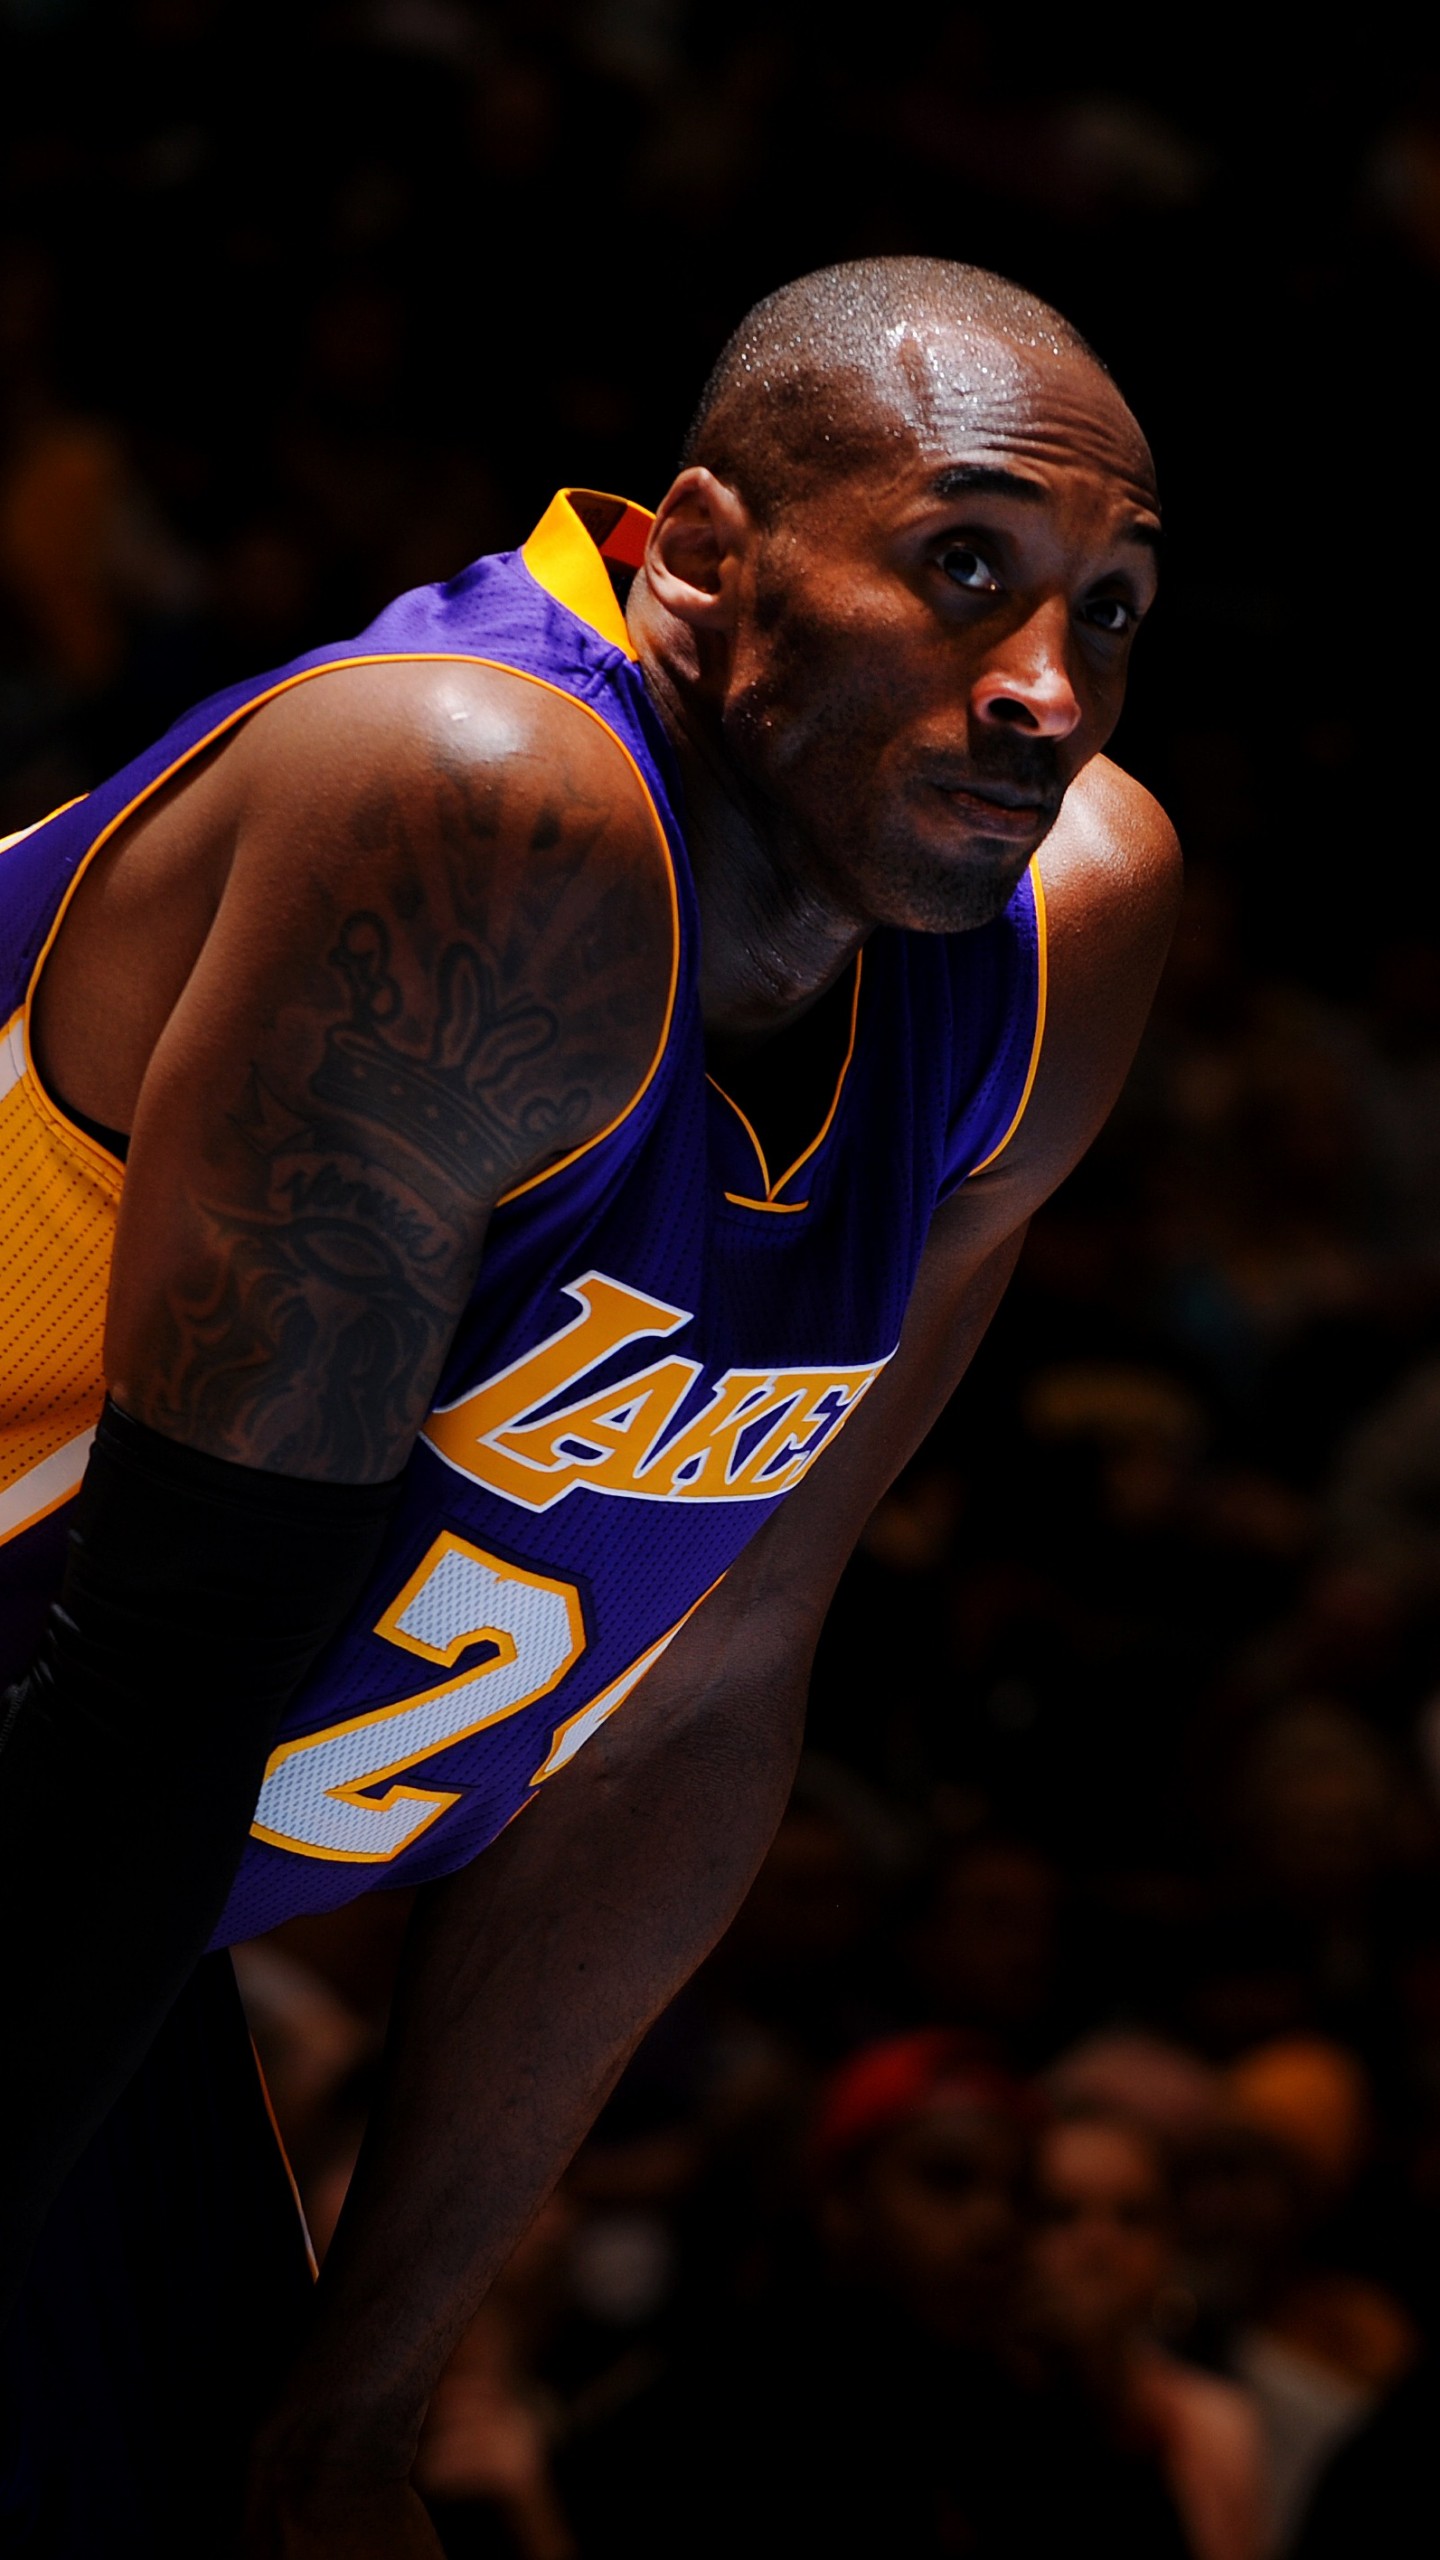 Wallpaper NBA, Kobe Bryant, Best Basketball Players of 2015, Los